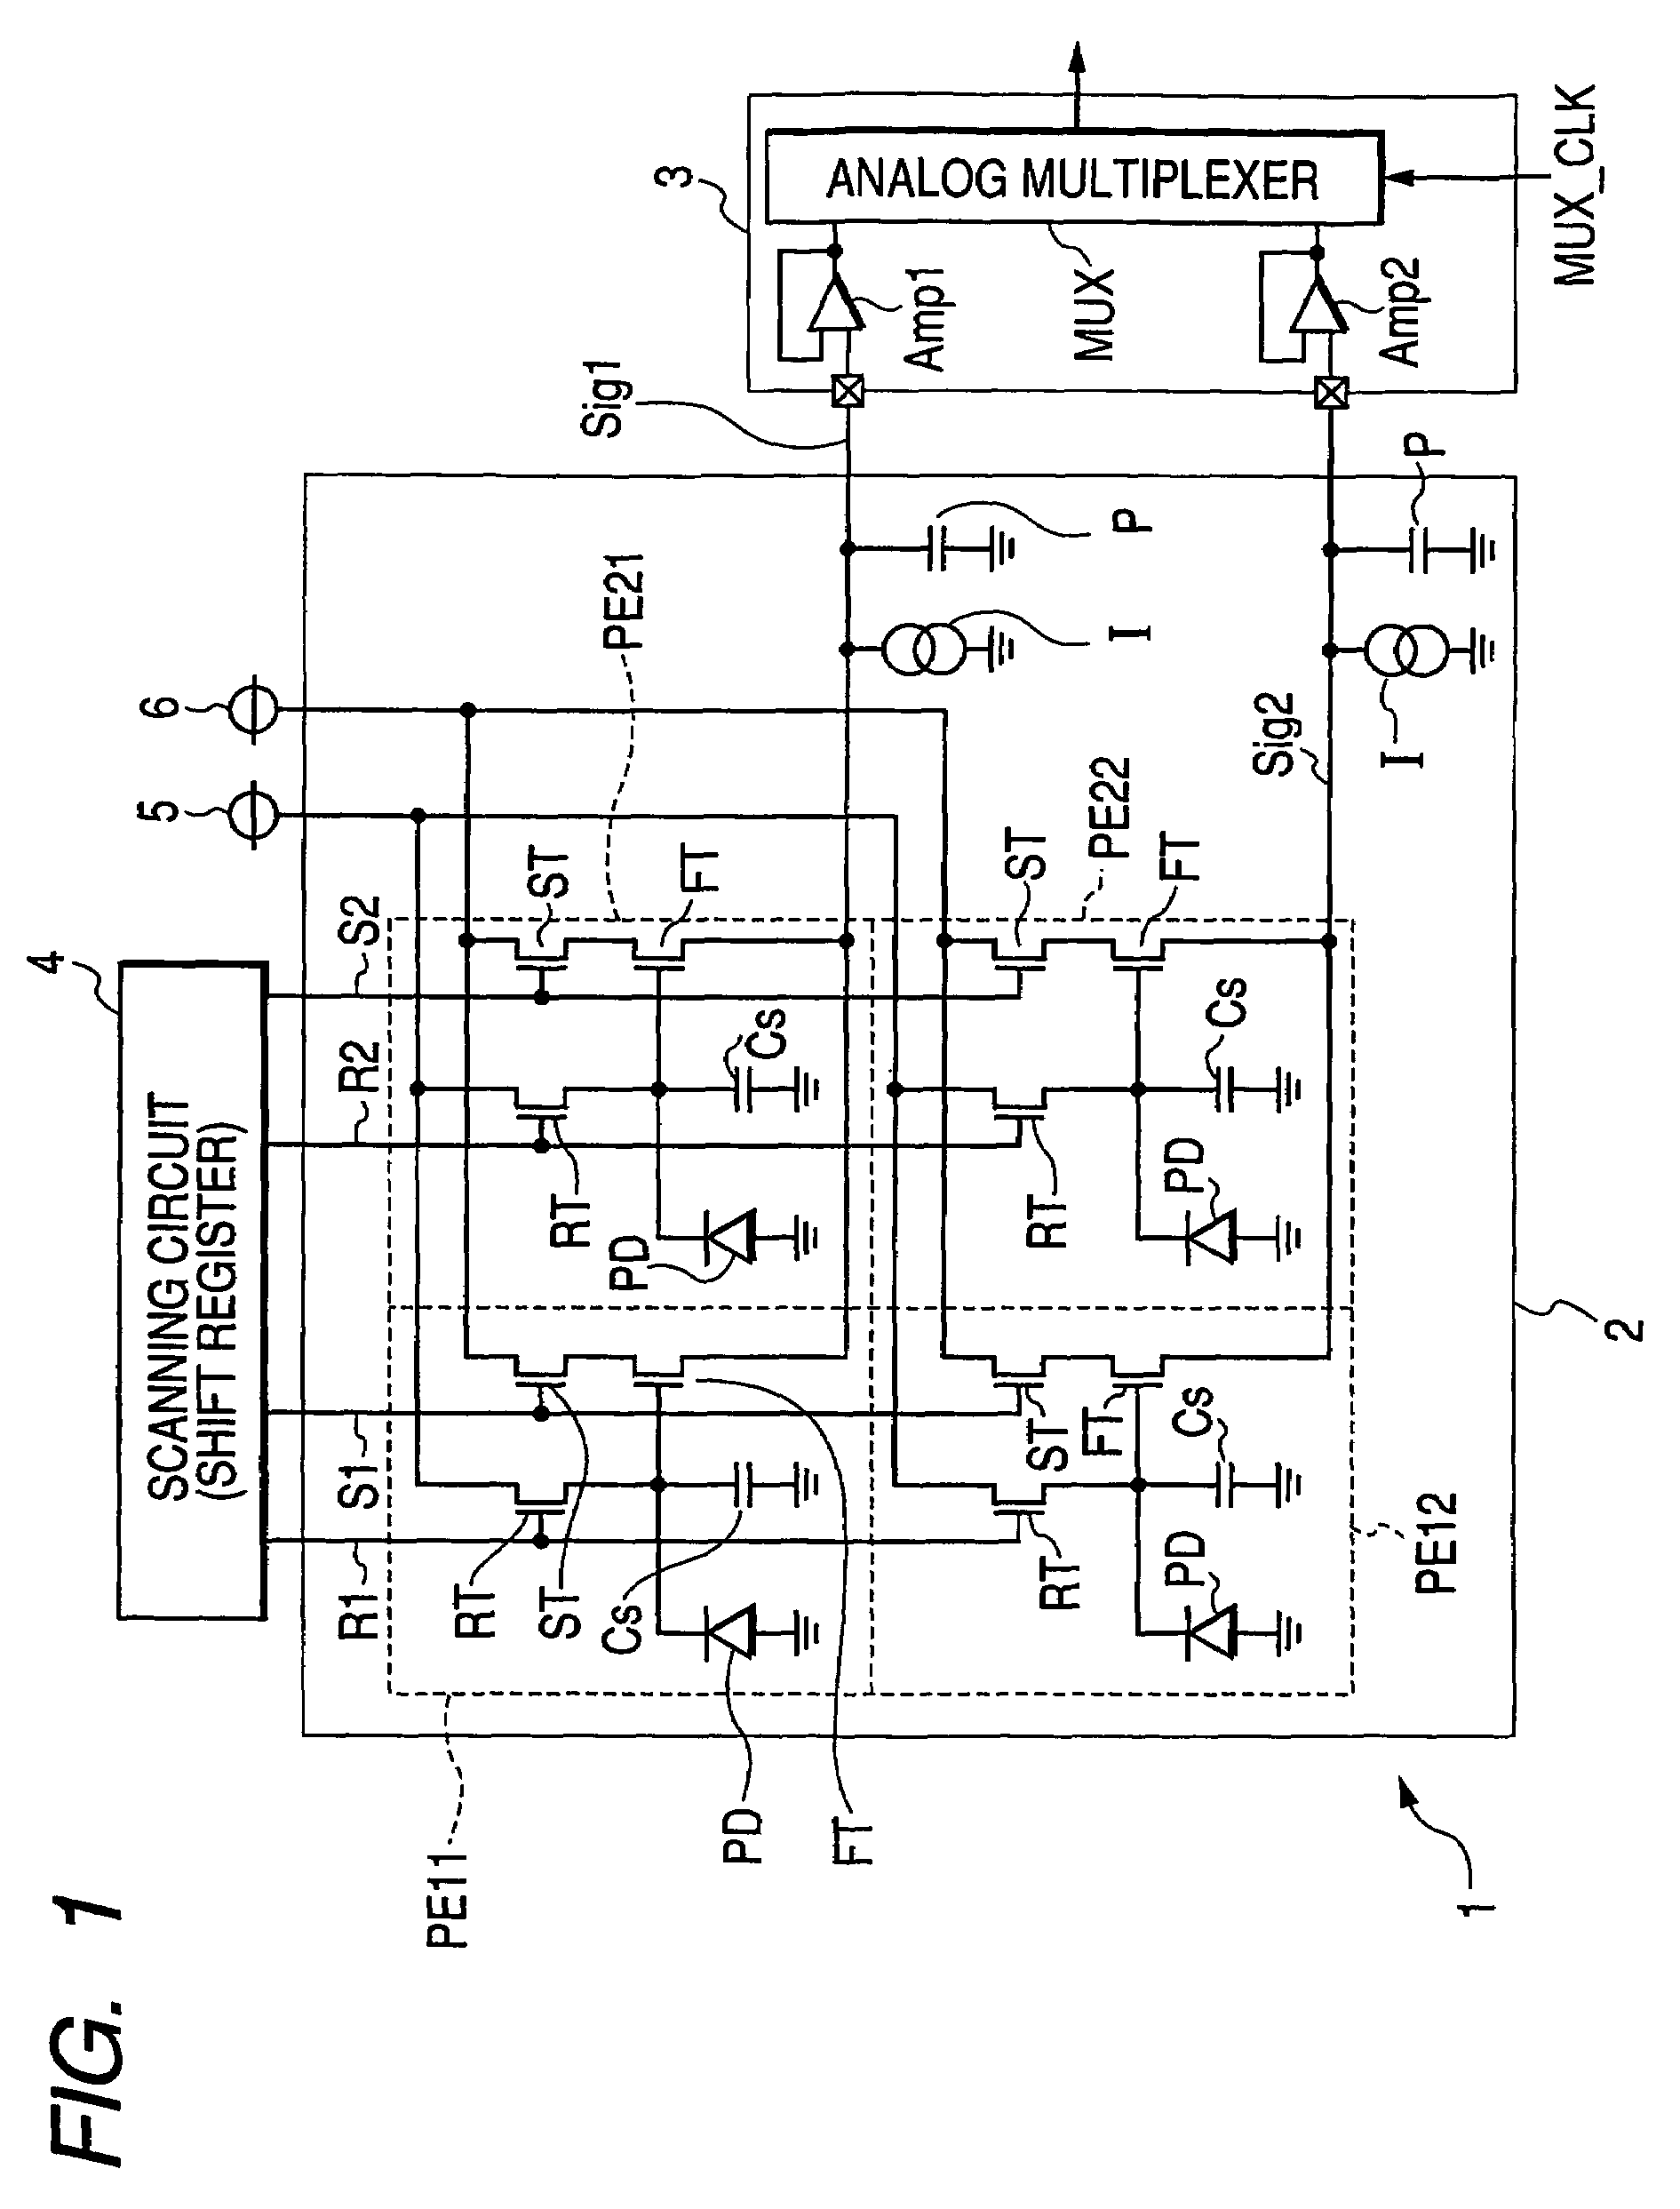 Photoelectric converting apparatus